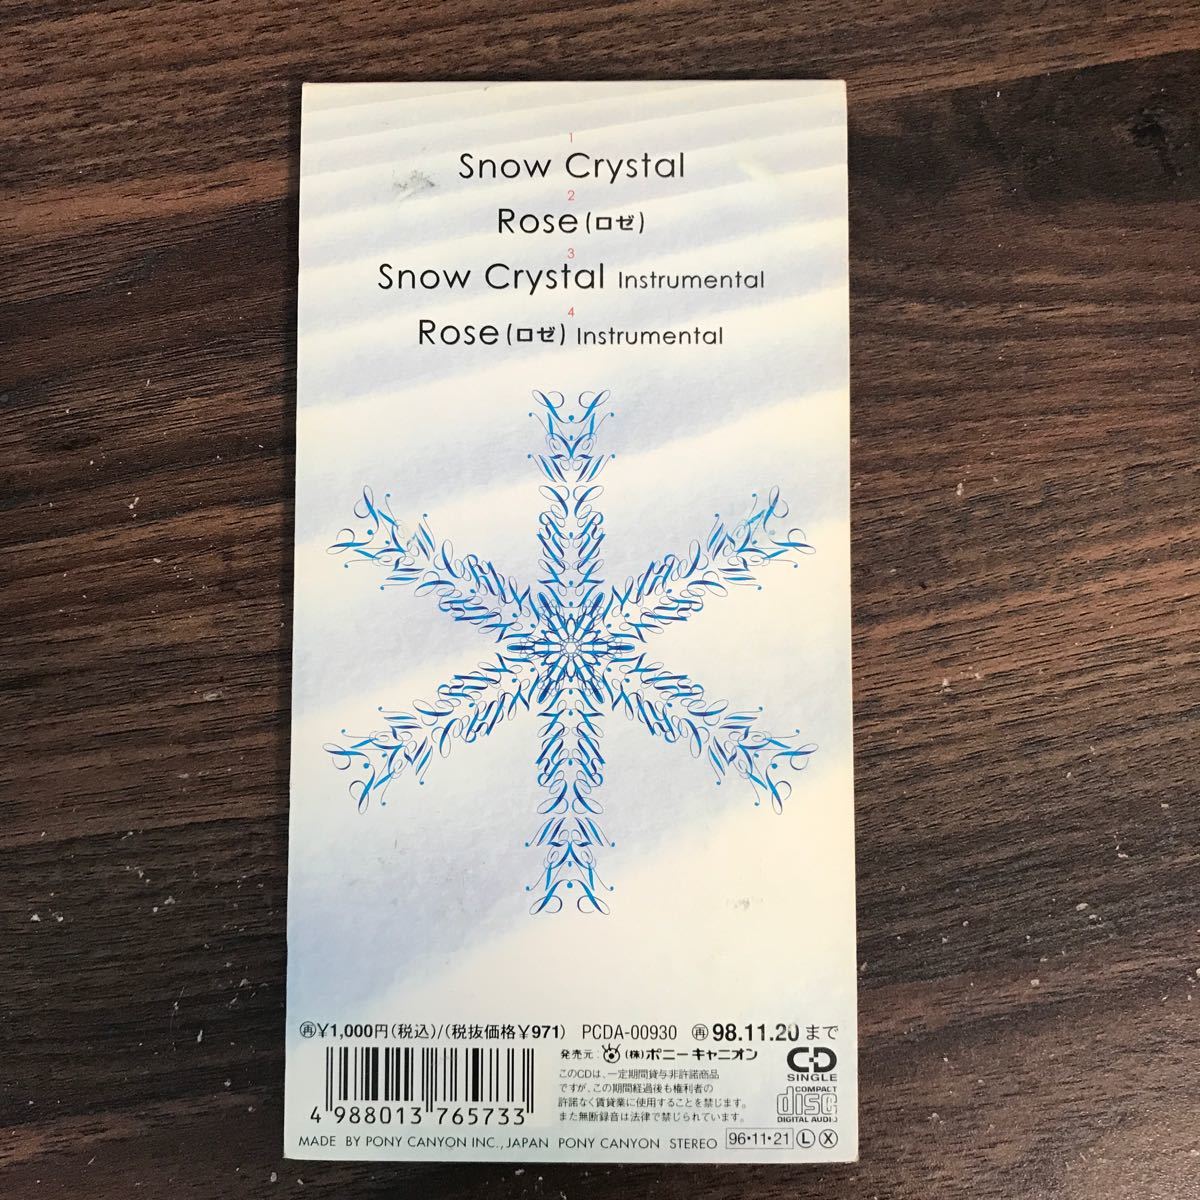 (G1006) б/у 8cmCD100 иен Fujii Fumiya Snow Crystal